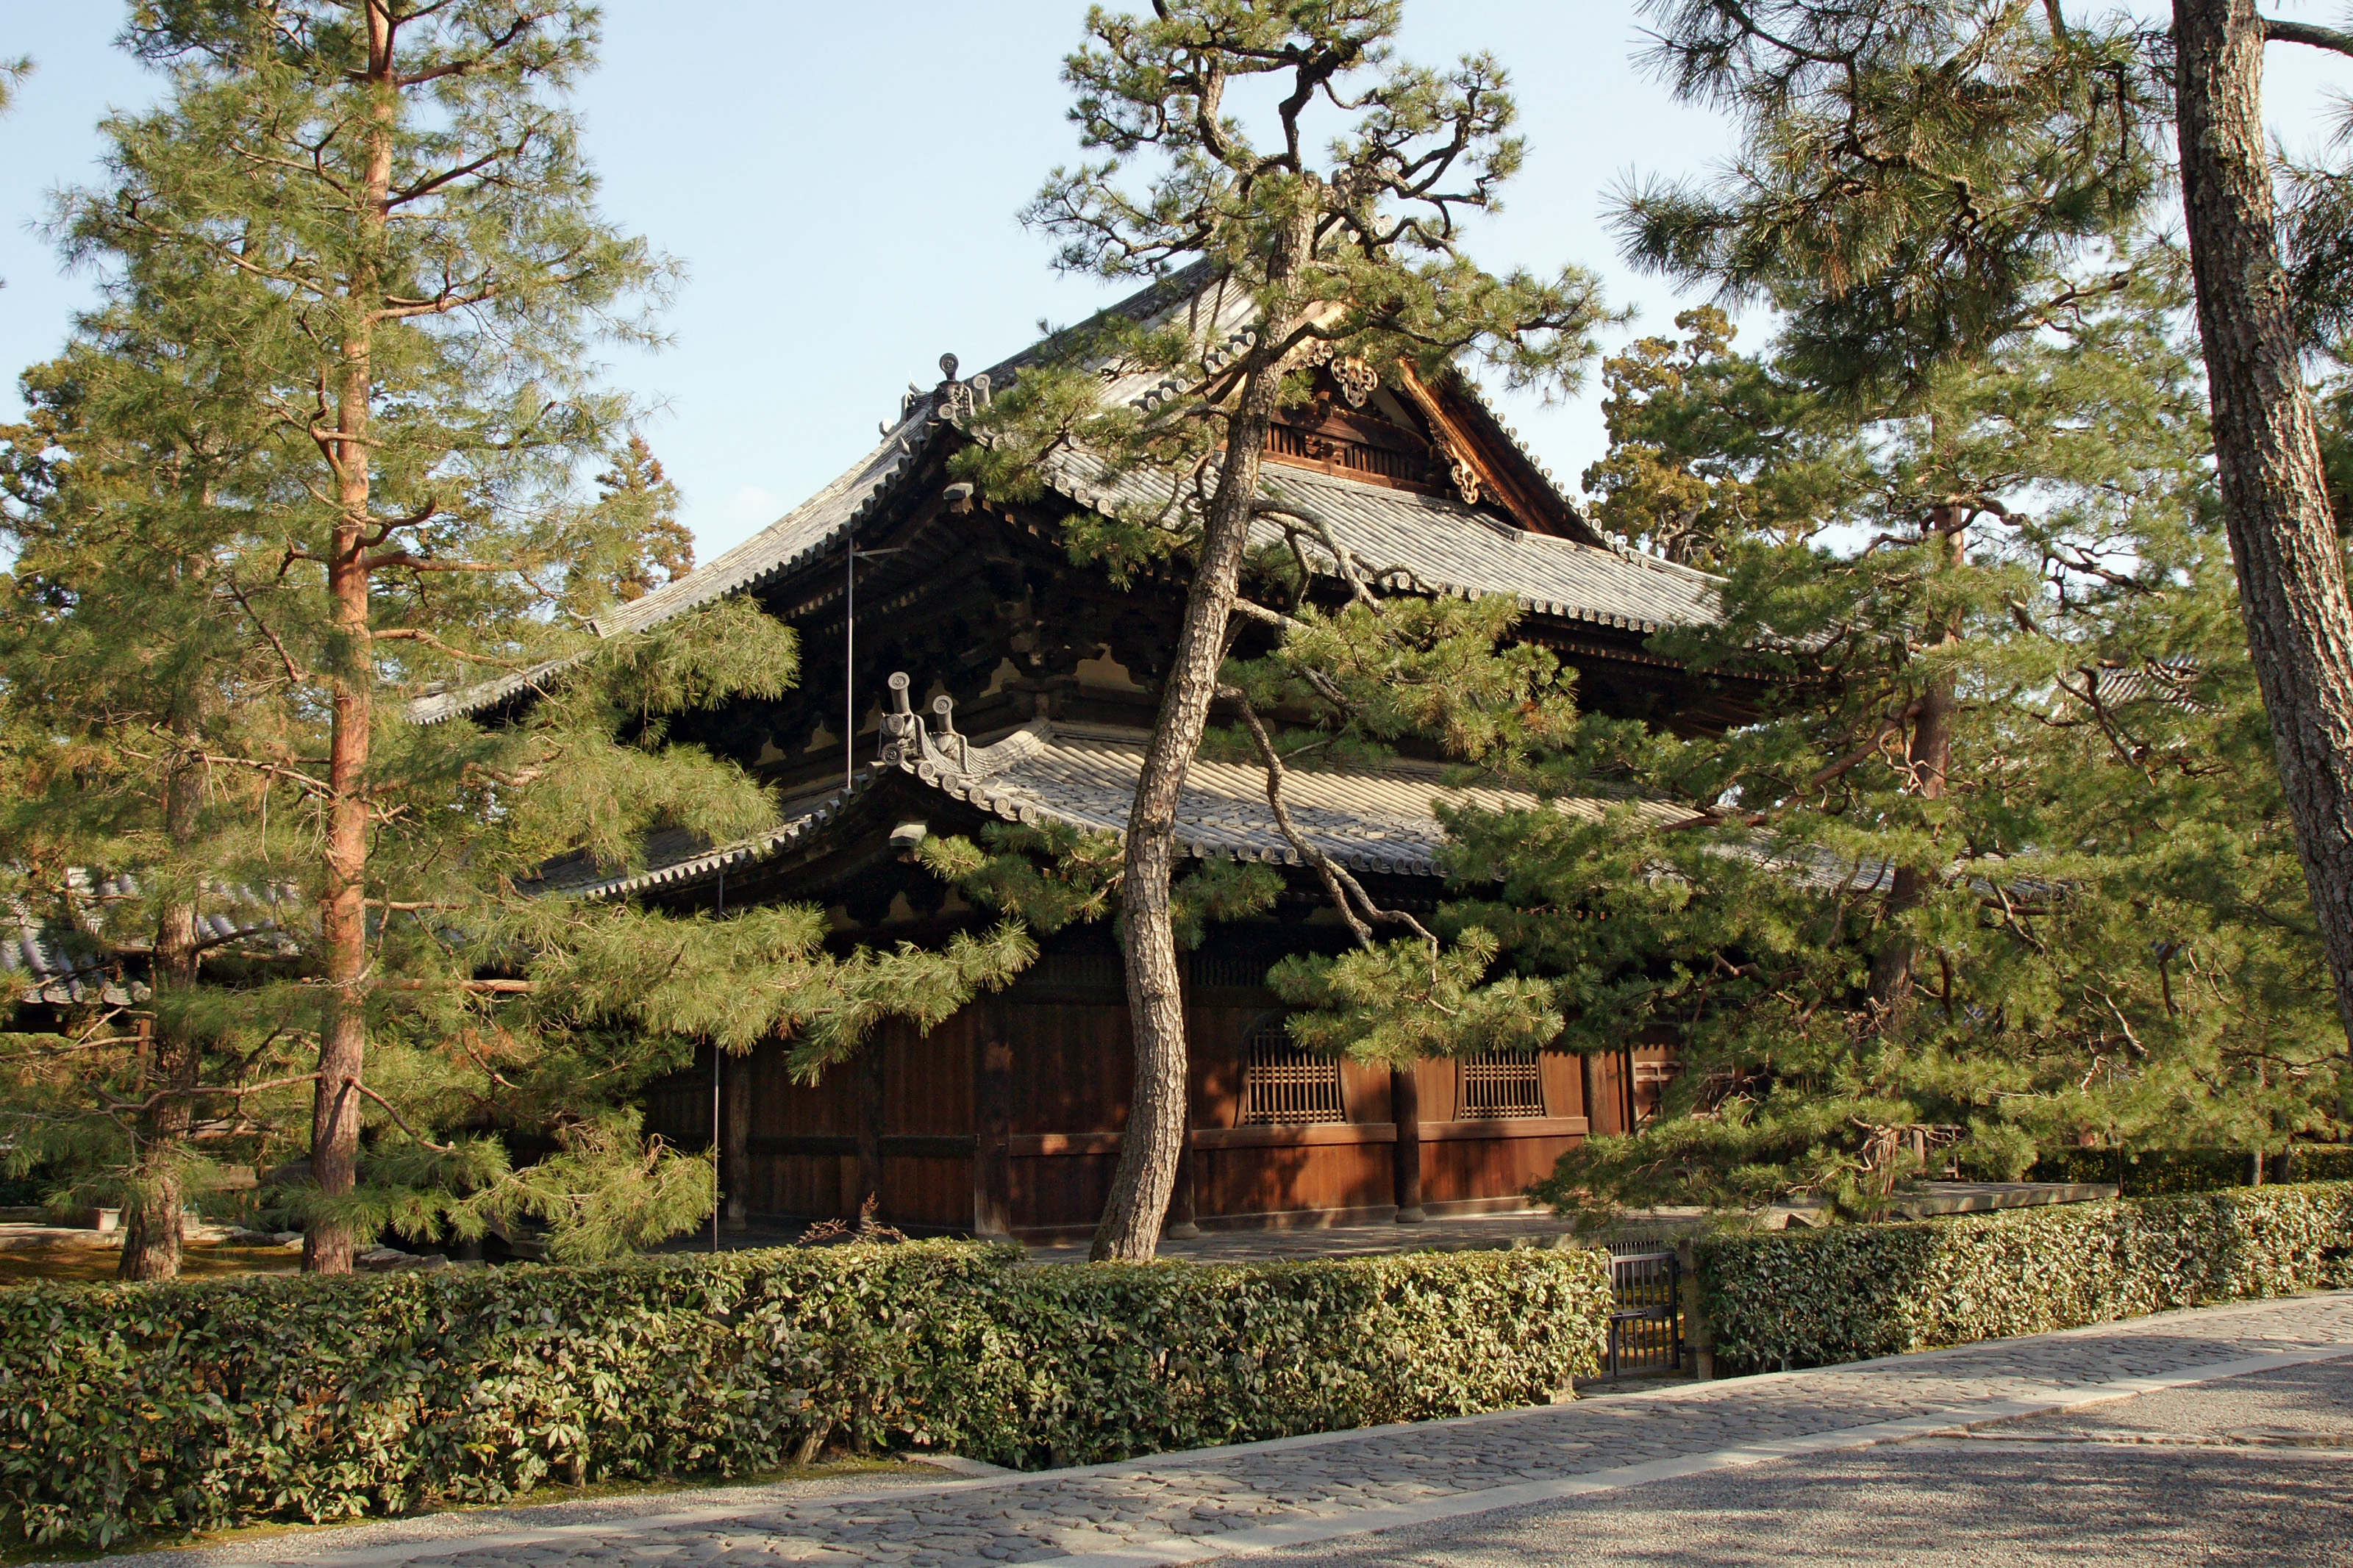 The Daitoku-ji temple